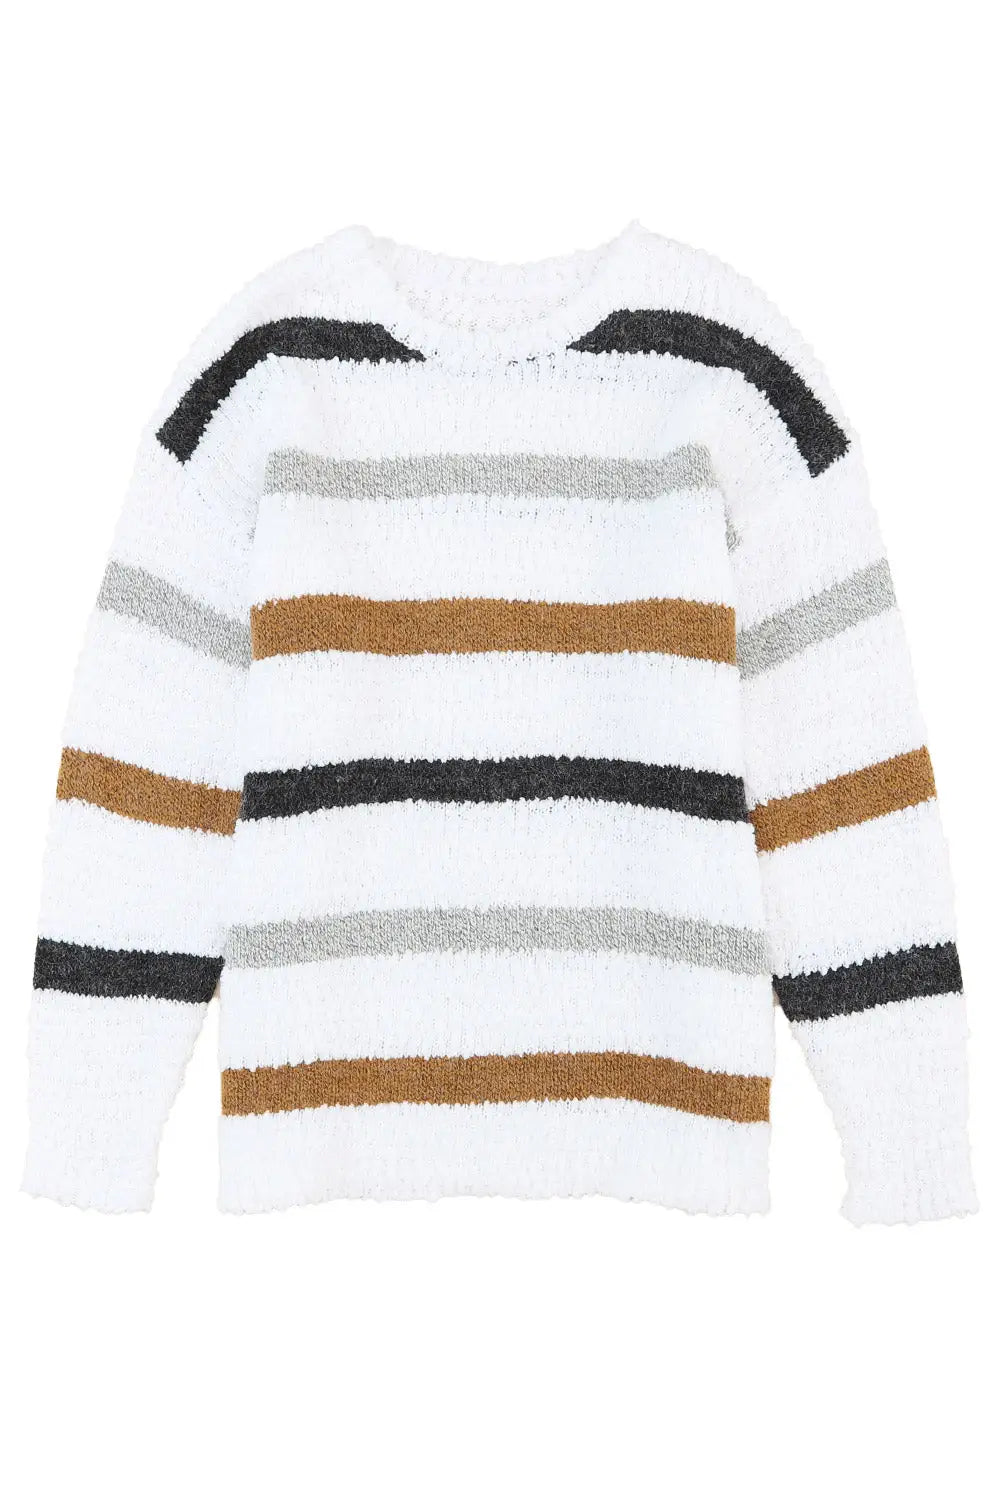 Striped popcorn knit sweater - sweaters & cardigans